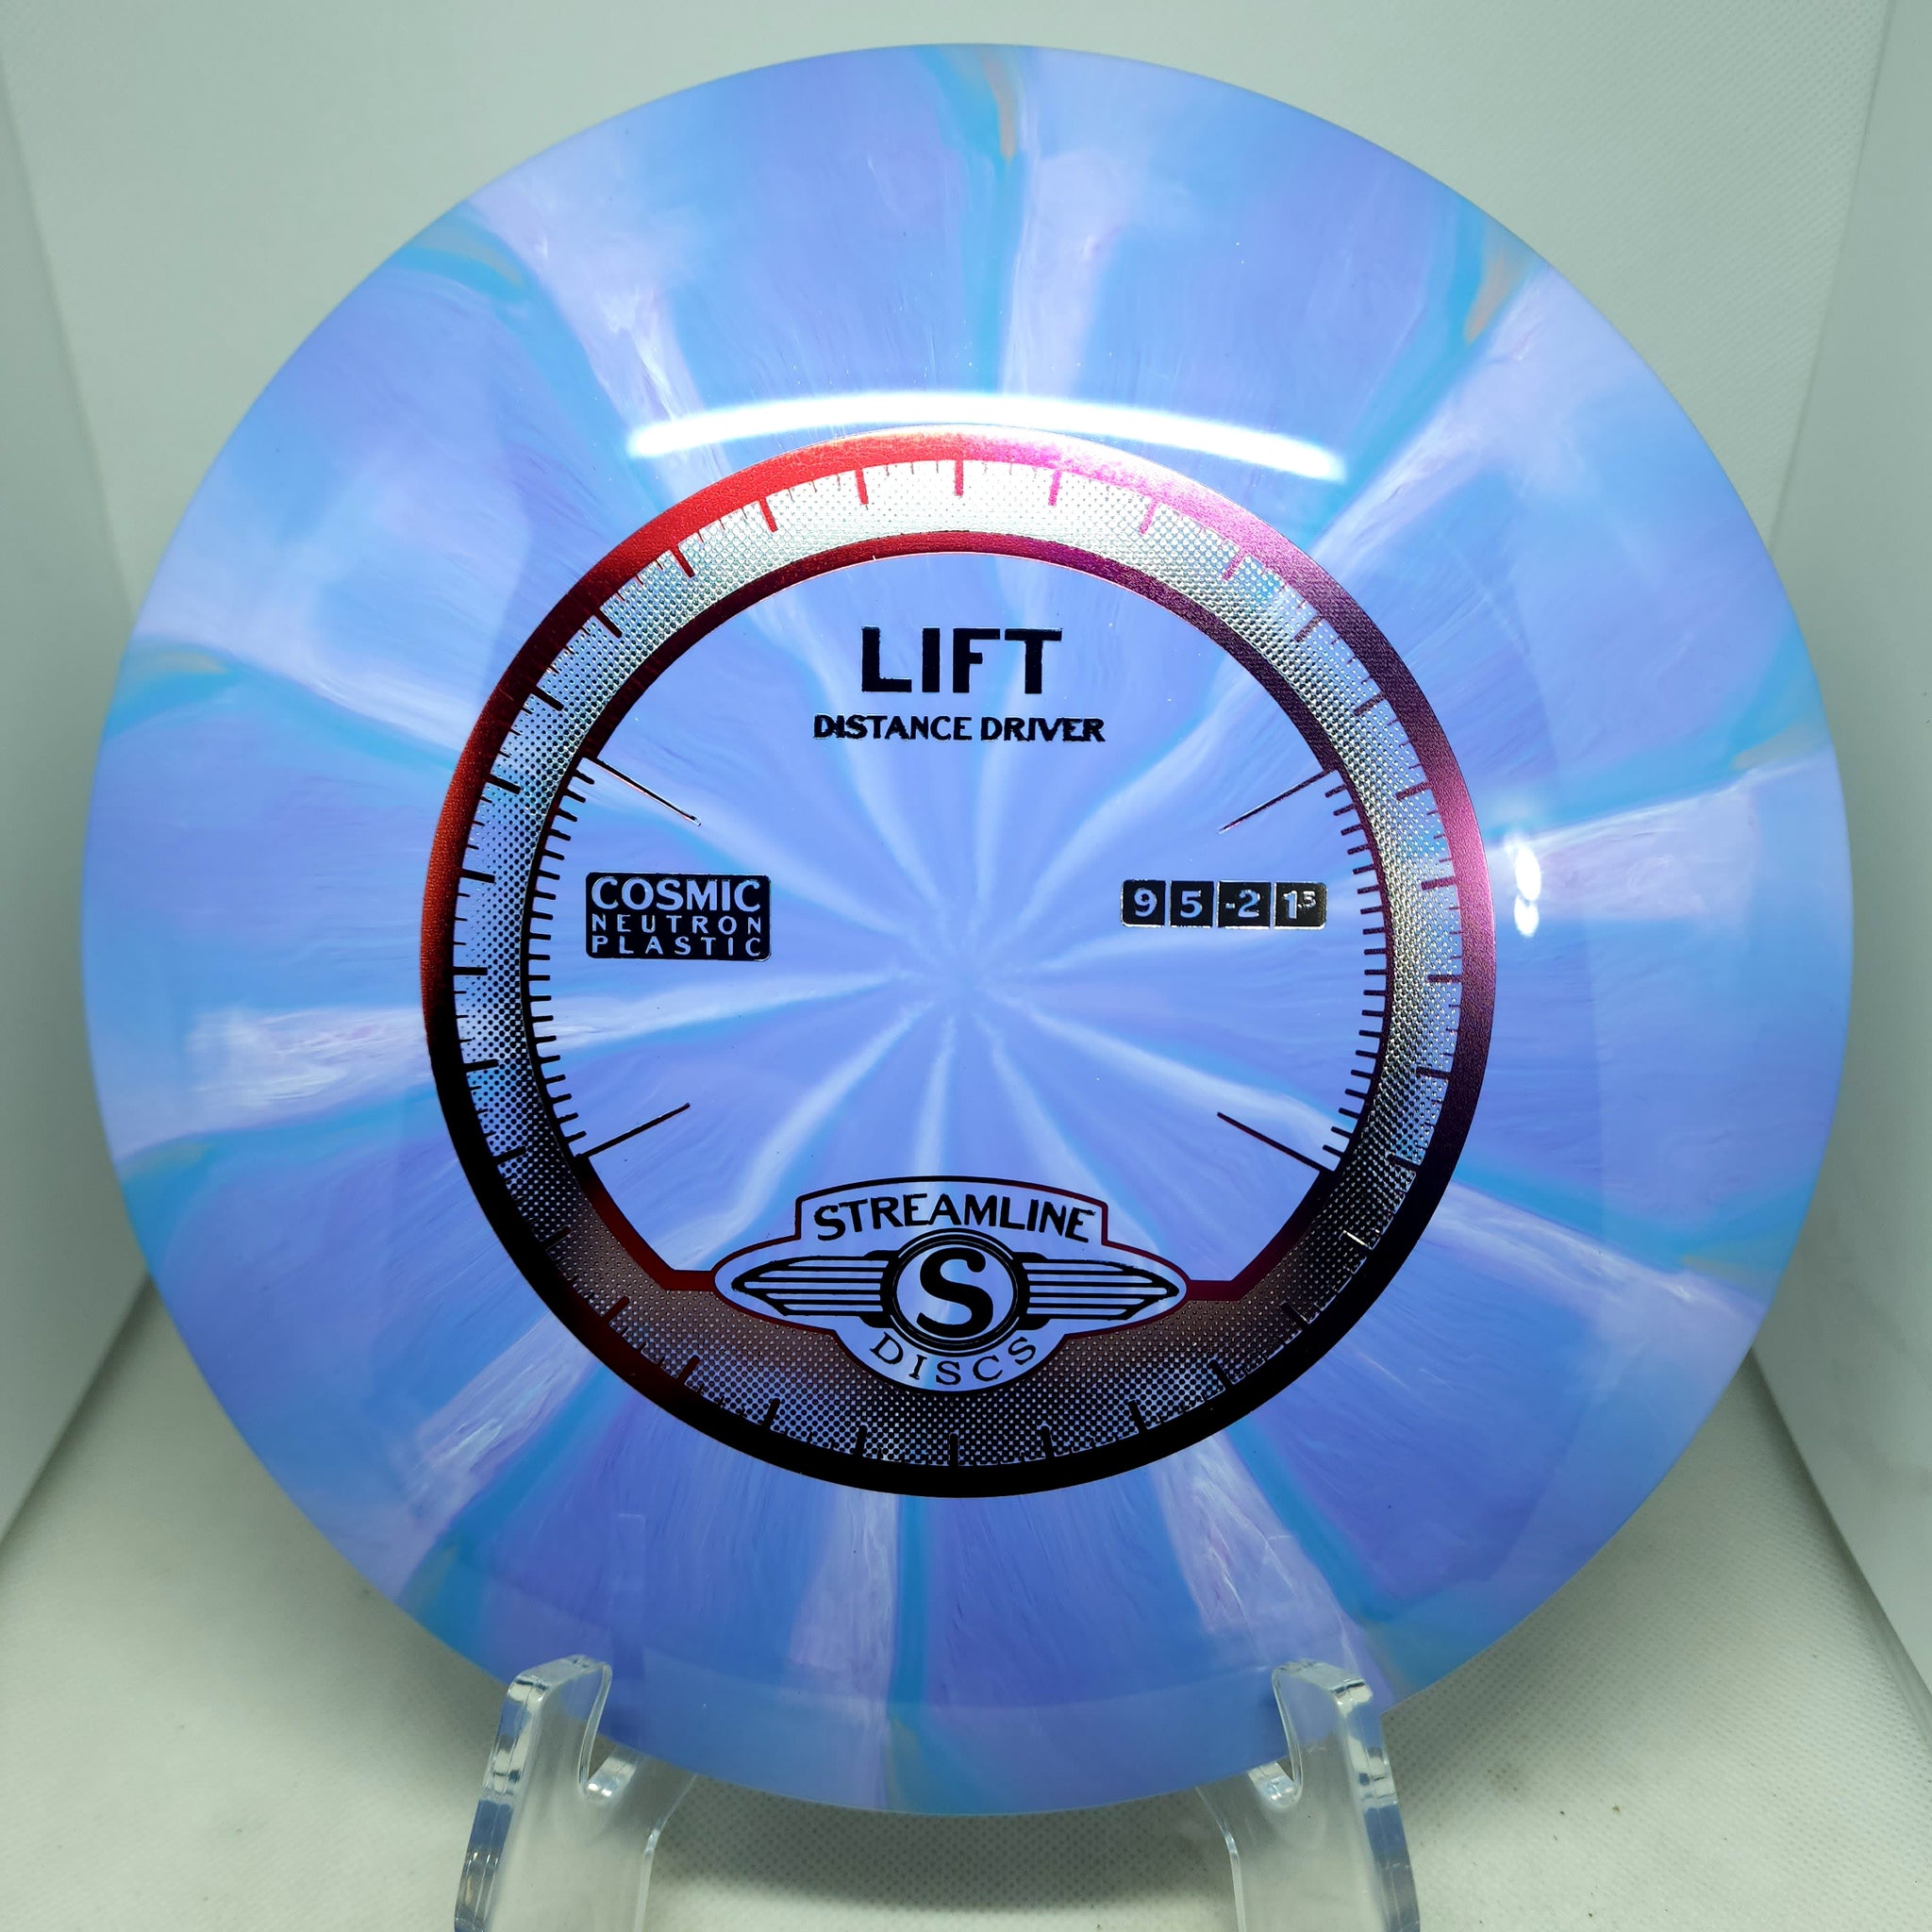 Lift (Cosmic Neutron Plastic)